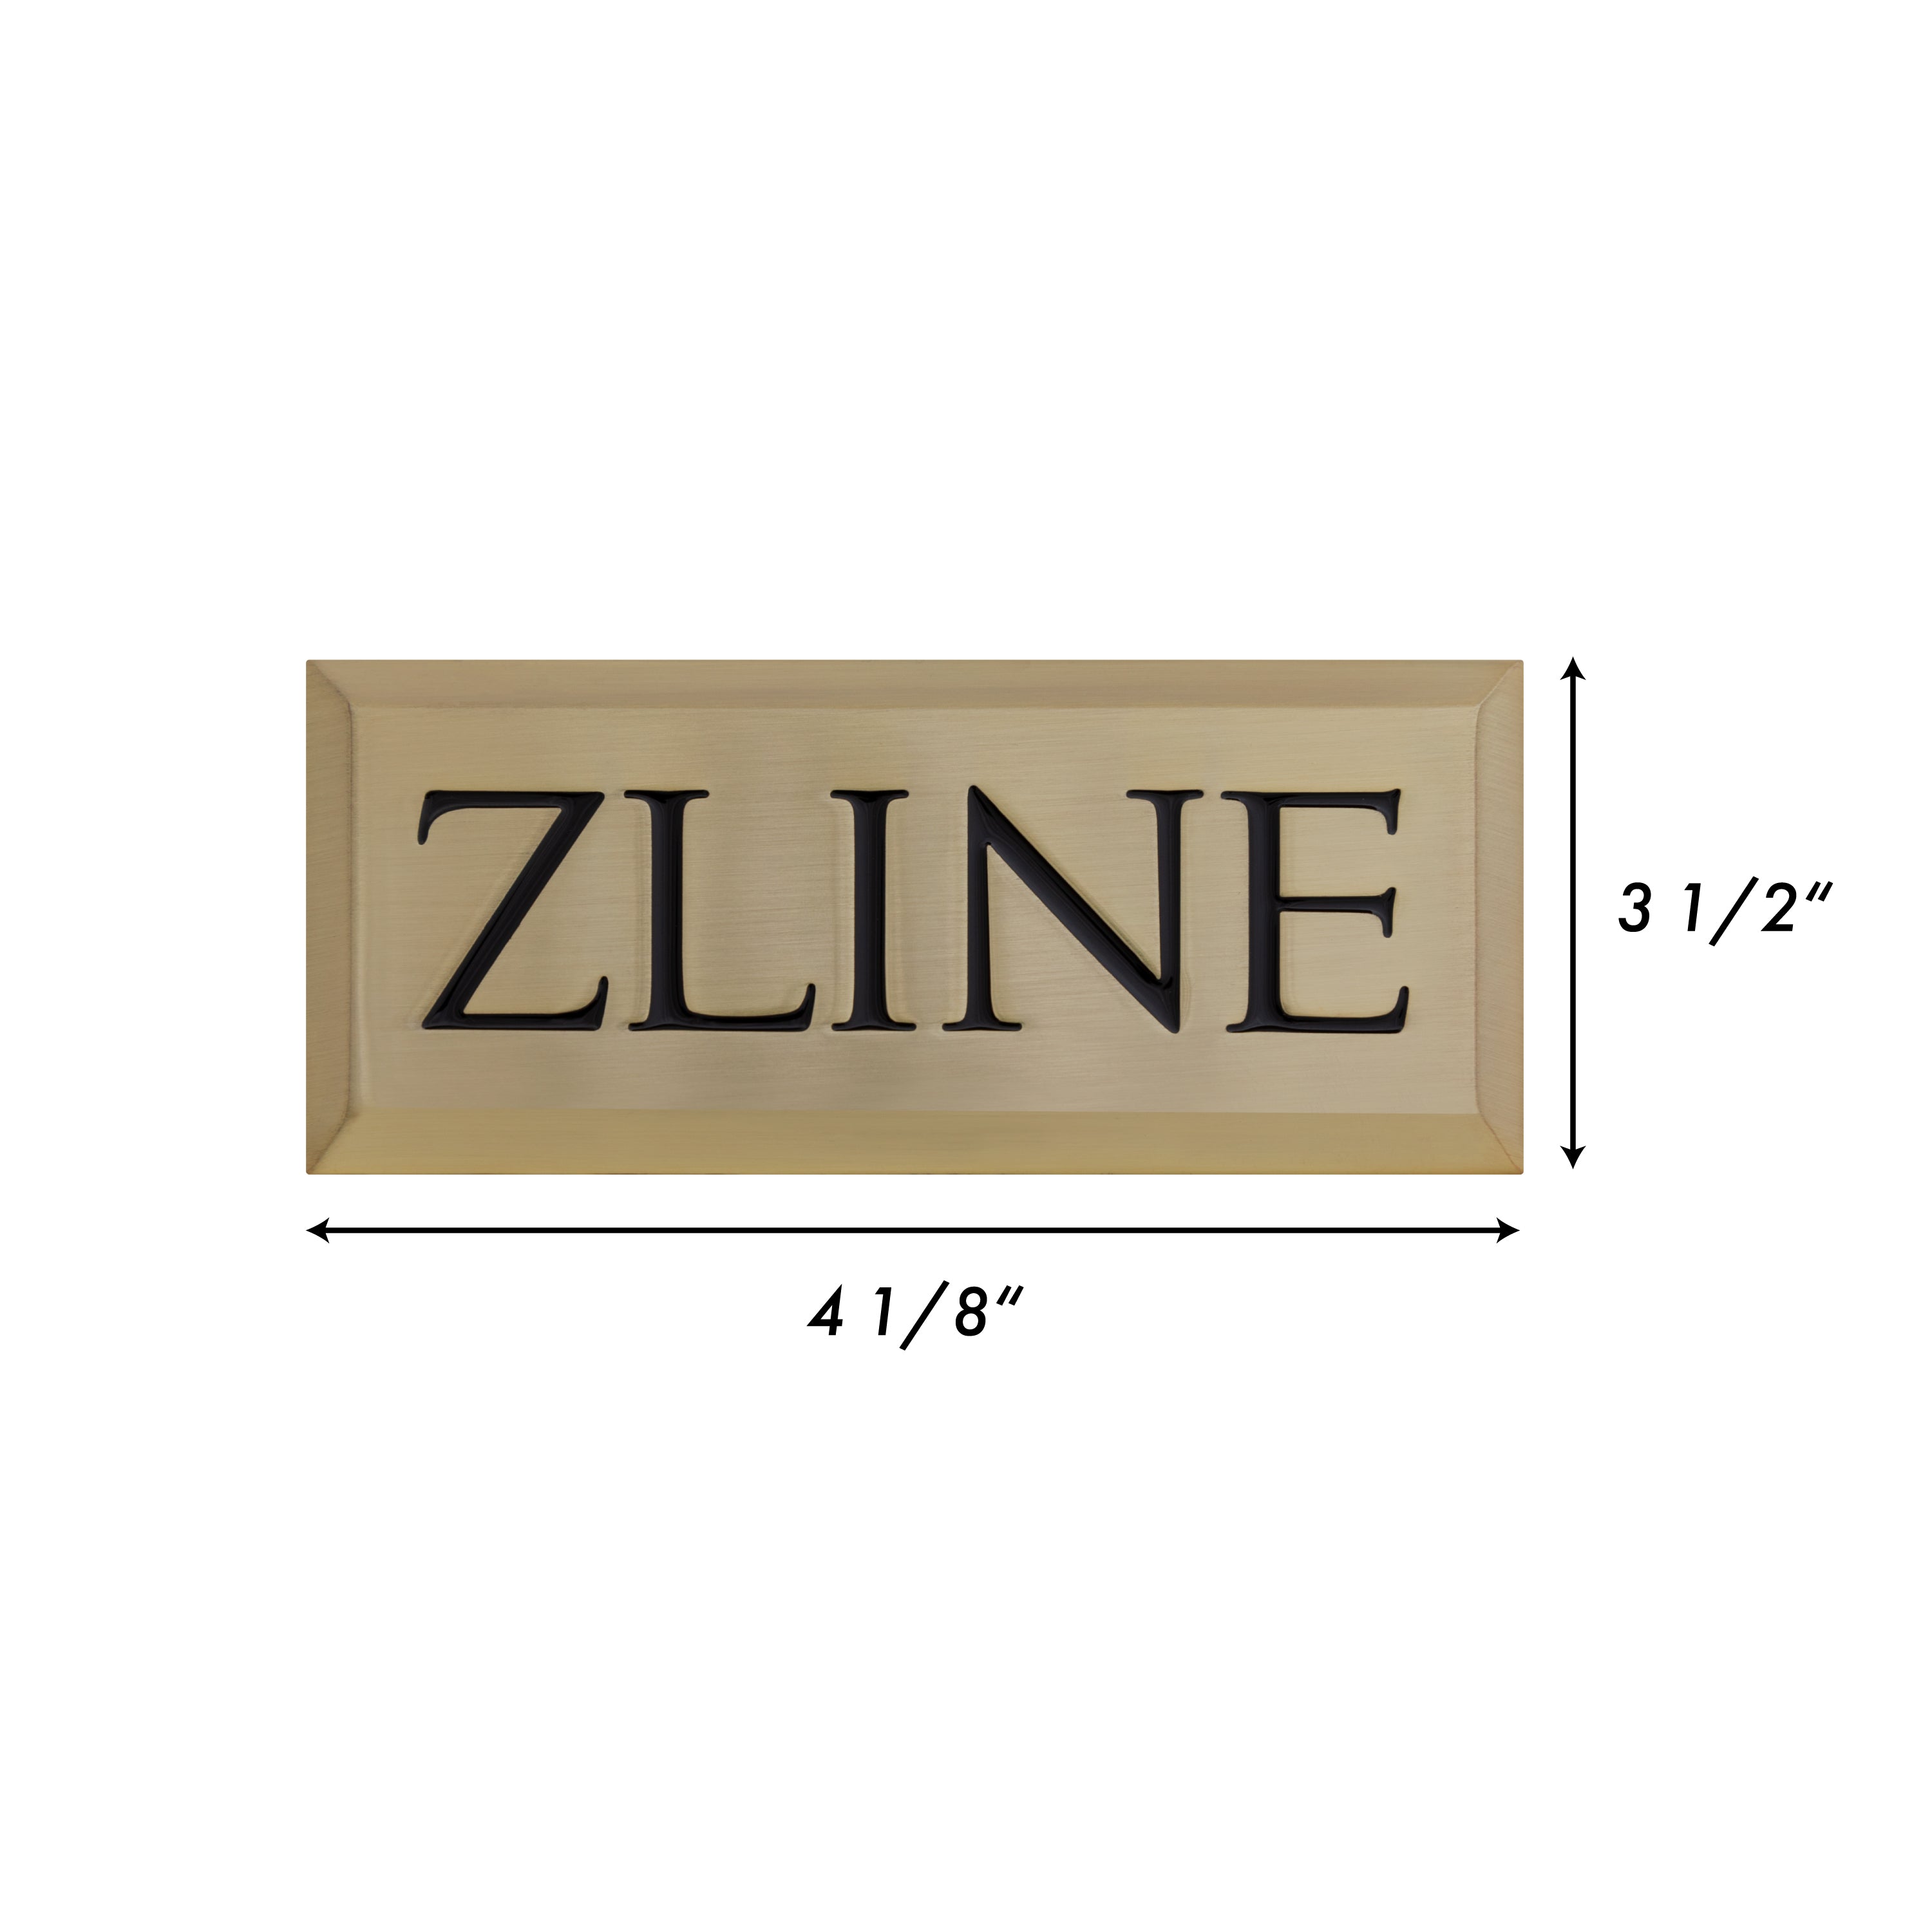 ZLINE Autograph Edition Badge Sample in Polished Gold